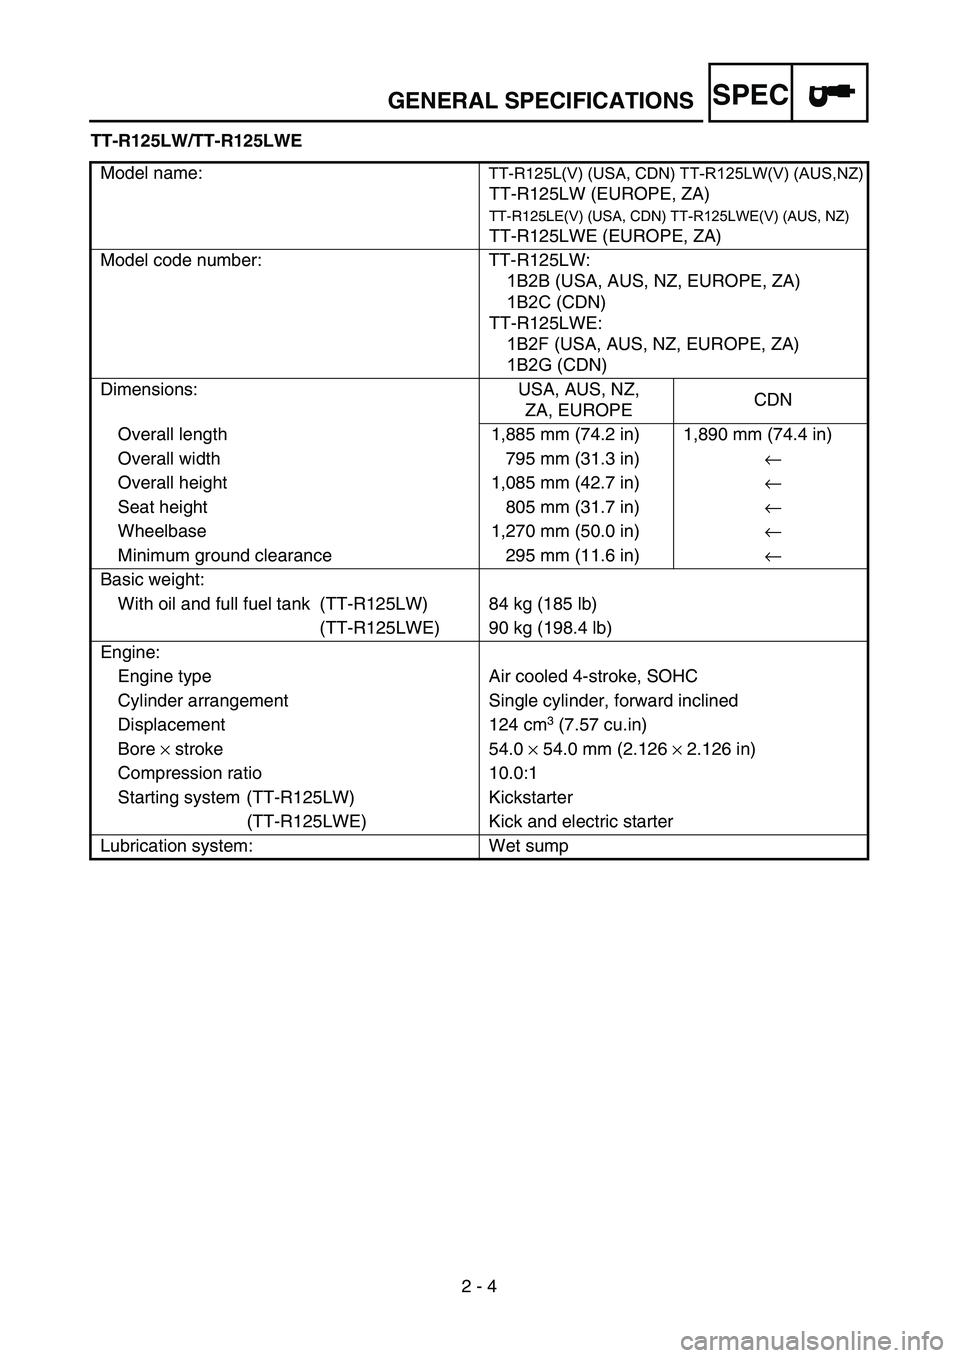 YAMAHA TTR125 2006  Notices Demploi (in French) SPEC
2 - 4
GENERAL SPECIFICATIONS
TT-R125LW/TT-R125LWEModel name: TT-R125L(V) (USA, CDN) TT-R125LW(V) (AUS,NZ) TT-R125LW (EUROPE, ZA)
TT-R125LE(V) (USA, CDN) TT-R125LWE(V) (AUS, NZ)
TT-R125LWE (EUROPE